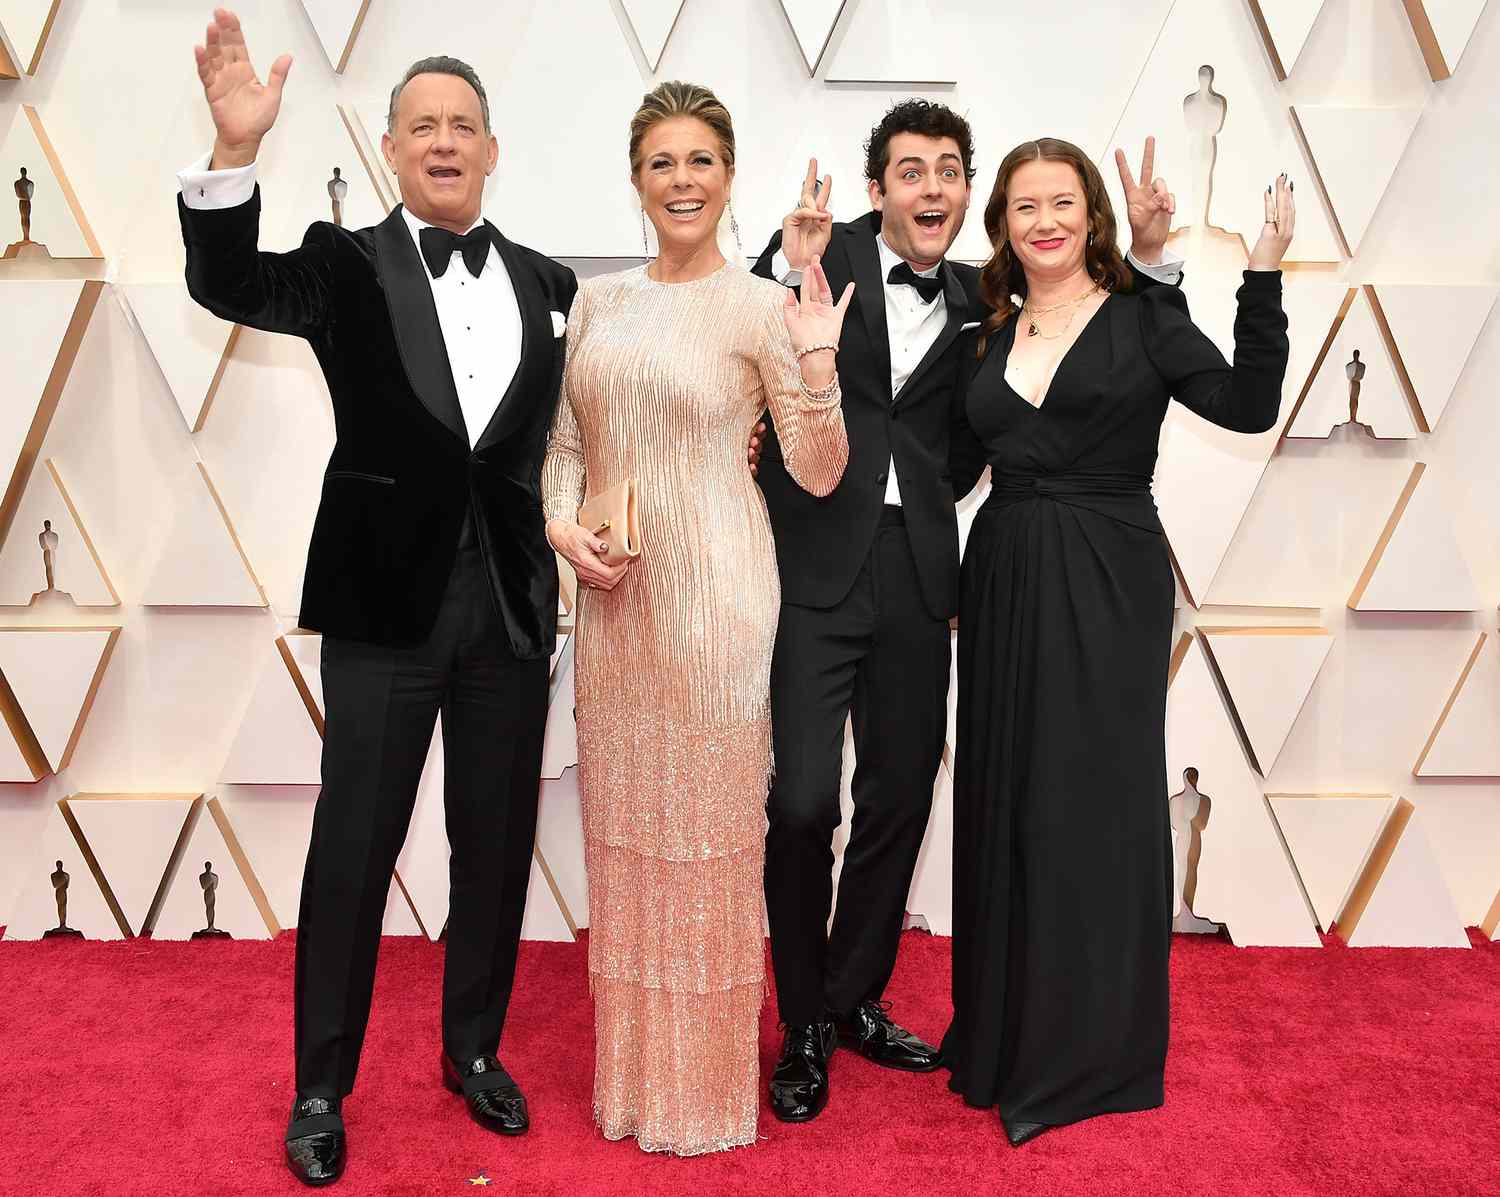 The Hanks Family Struck a Pose&nbsp;